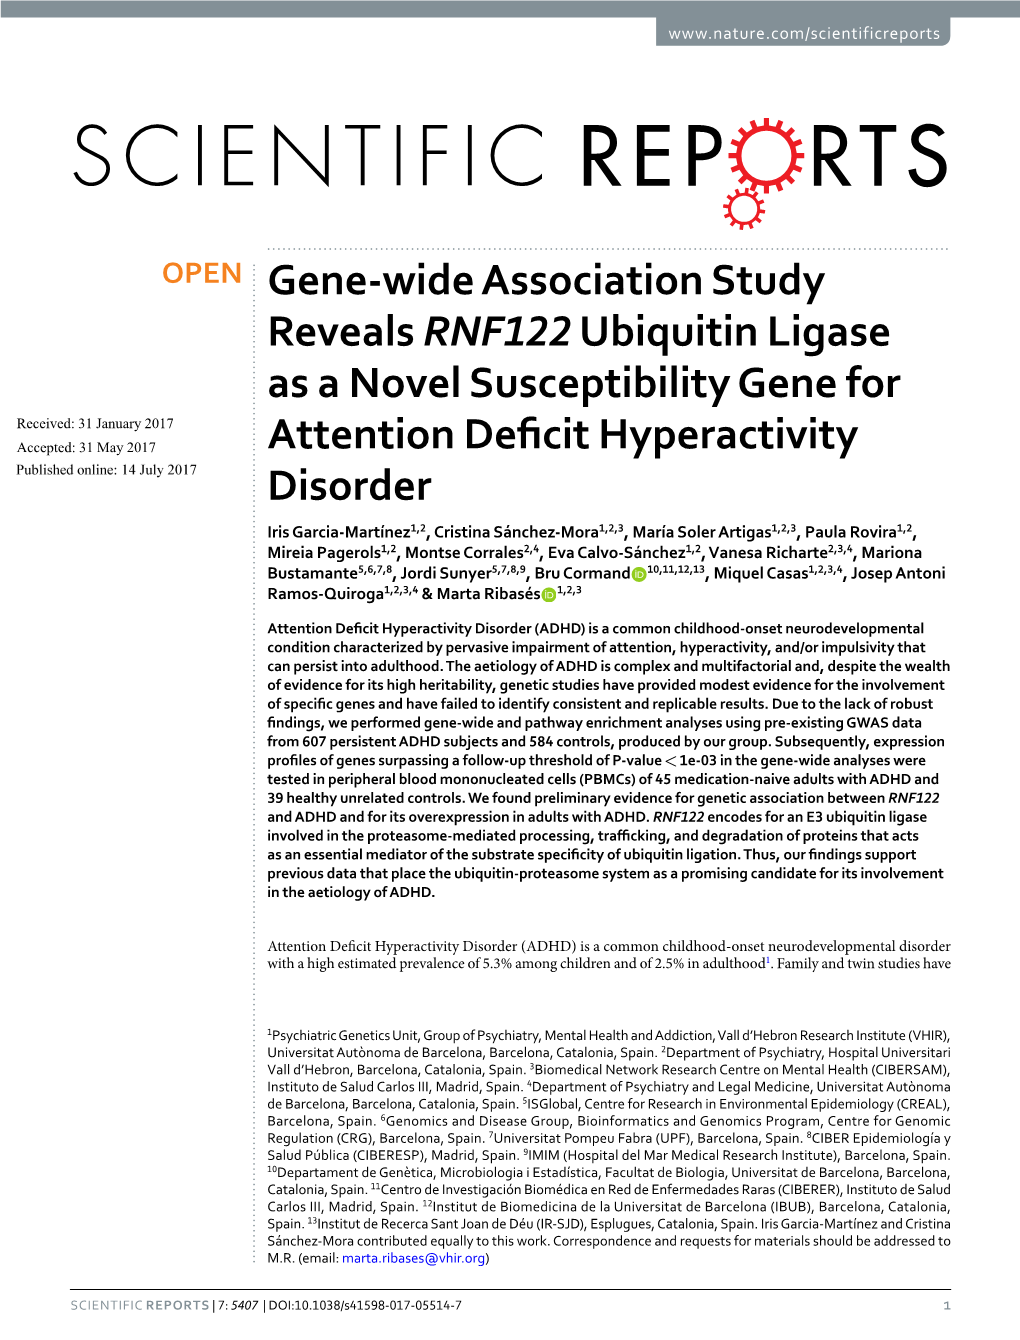 Gene-Wide Association Study Reveals RNF122 Ubiquitin Ligase As A